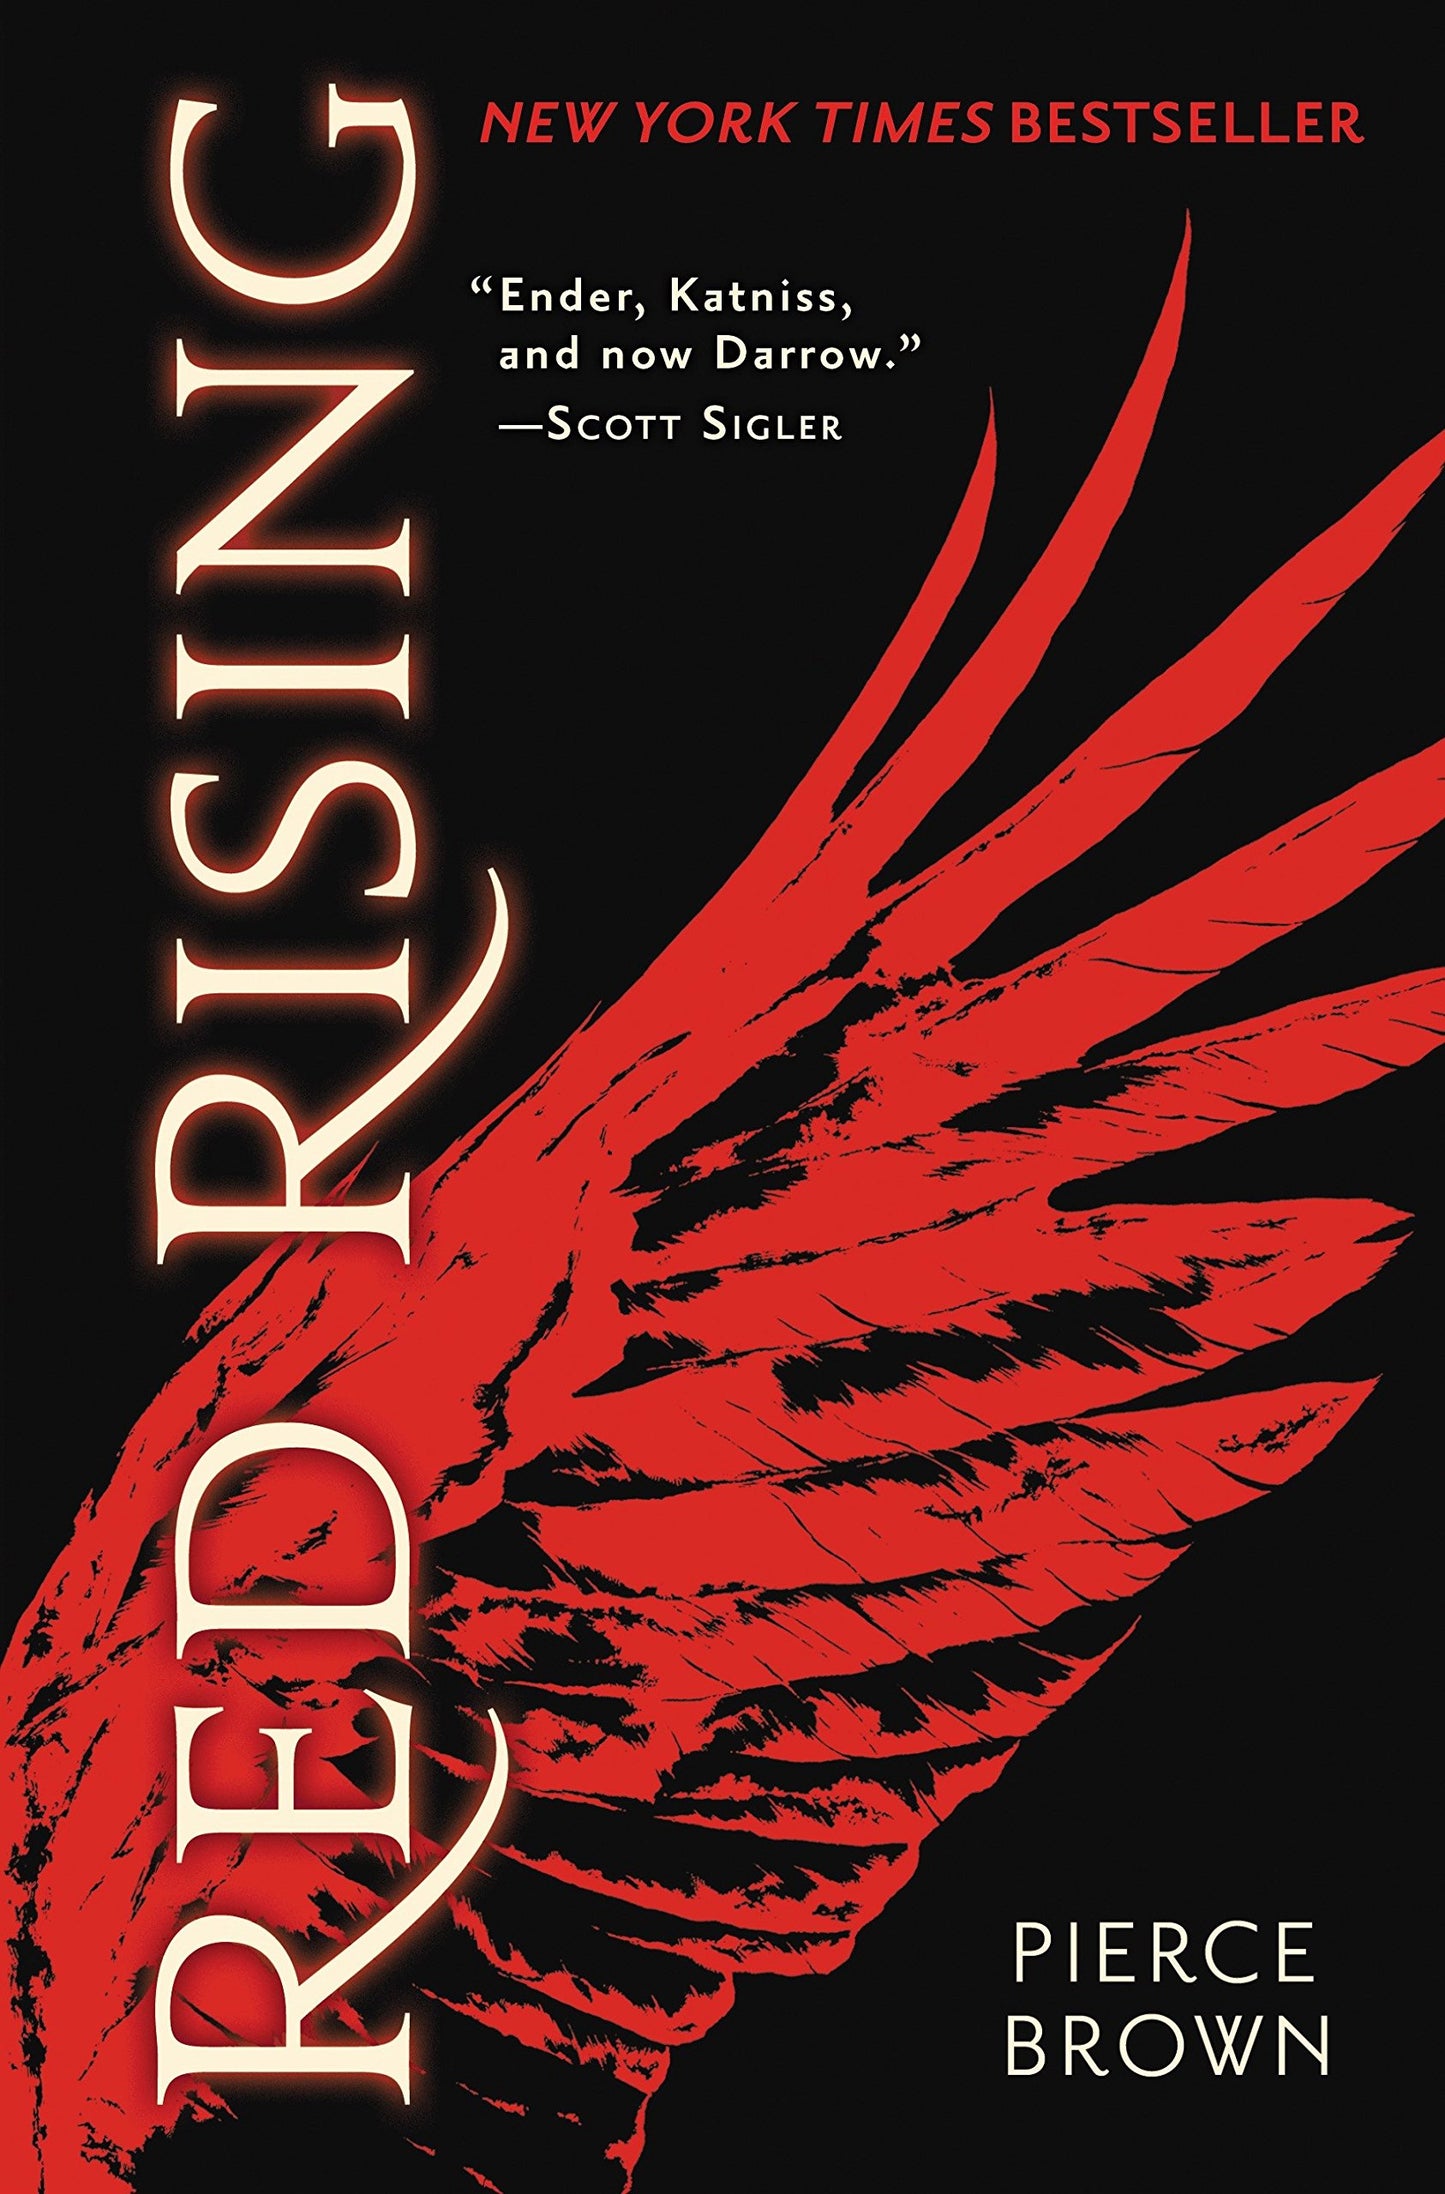 Red Rising Saga Hardcovers 1-3 by Pierce Brown